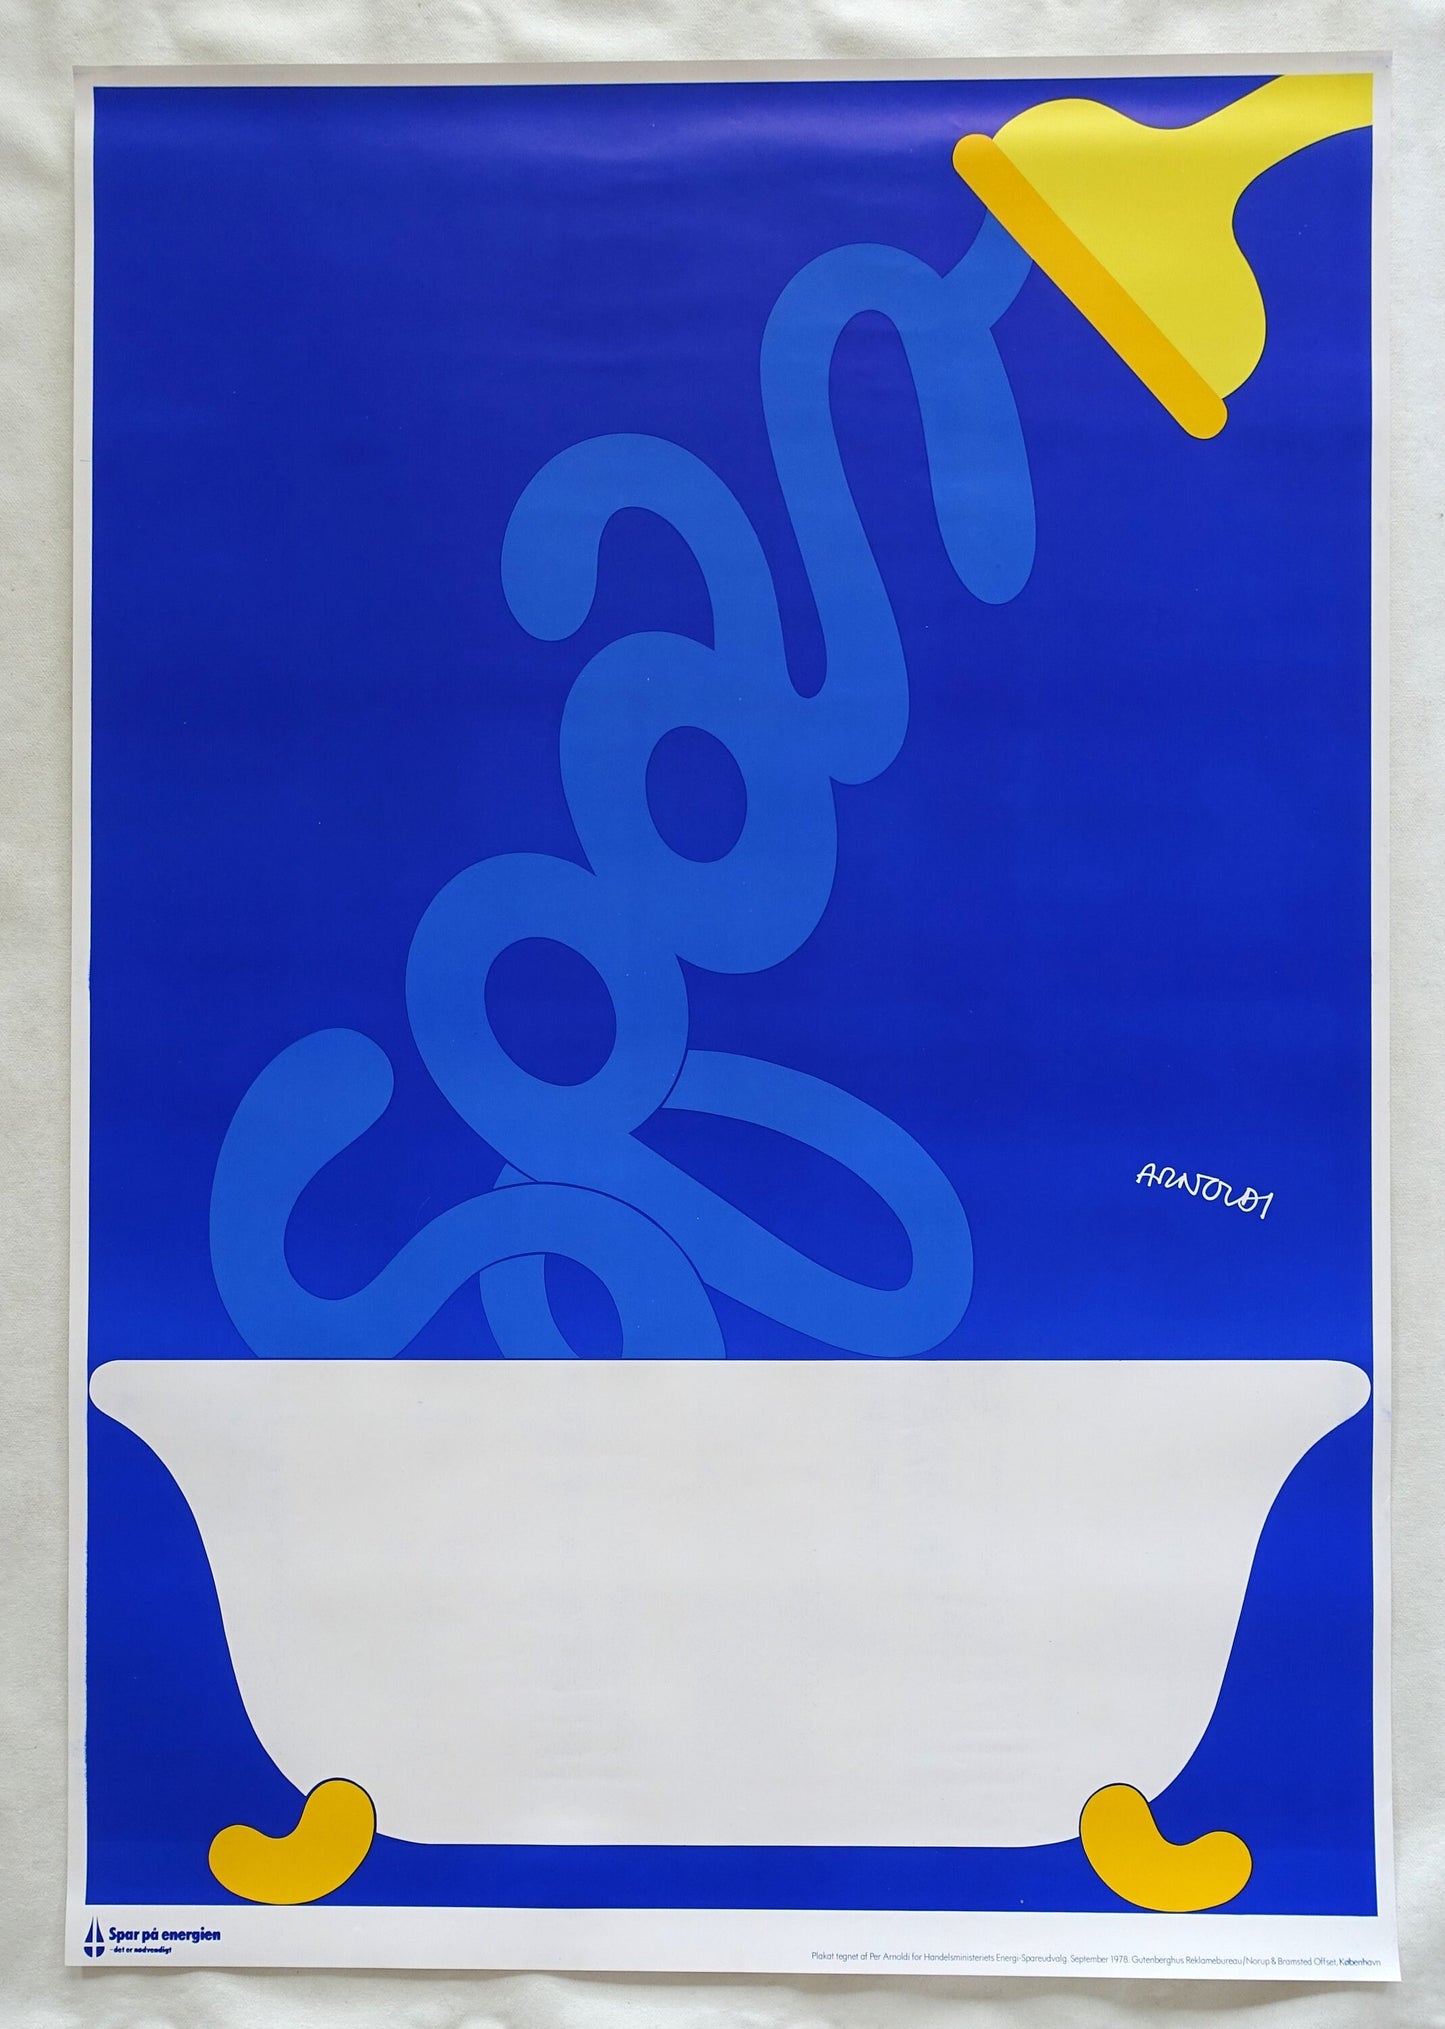 1978 Save Energy Campaign by Per Arnoldi (shower) - Original Vintage Poster